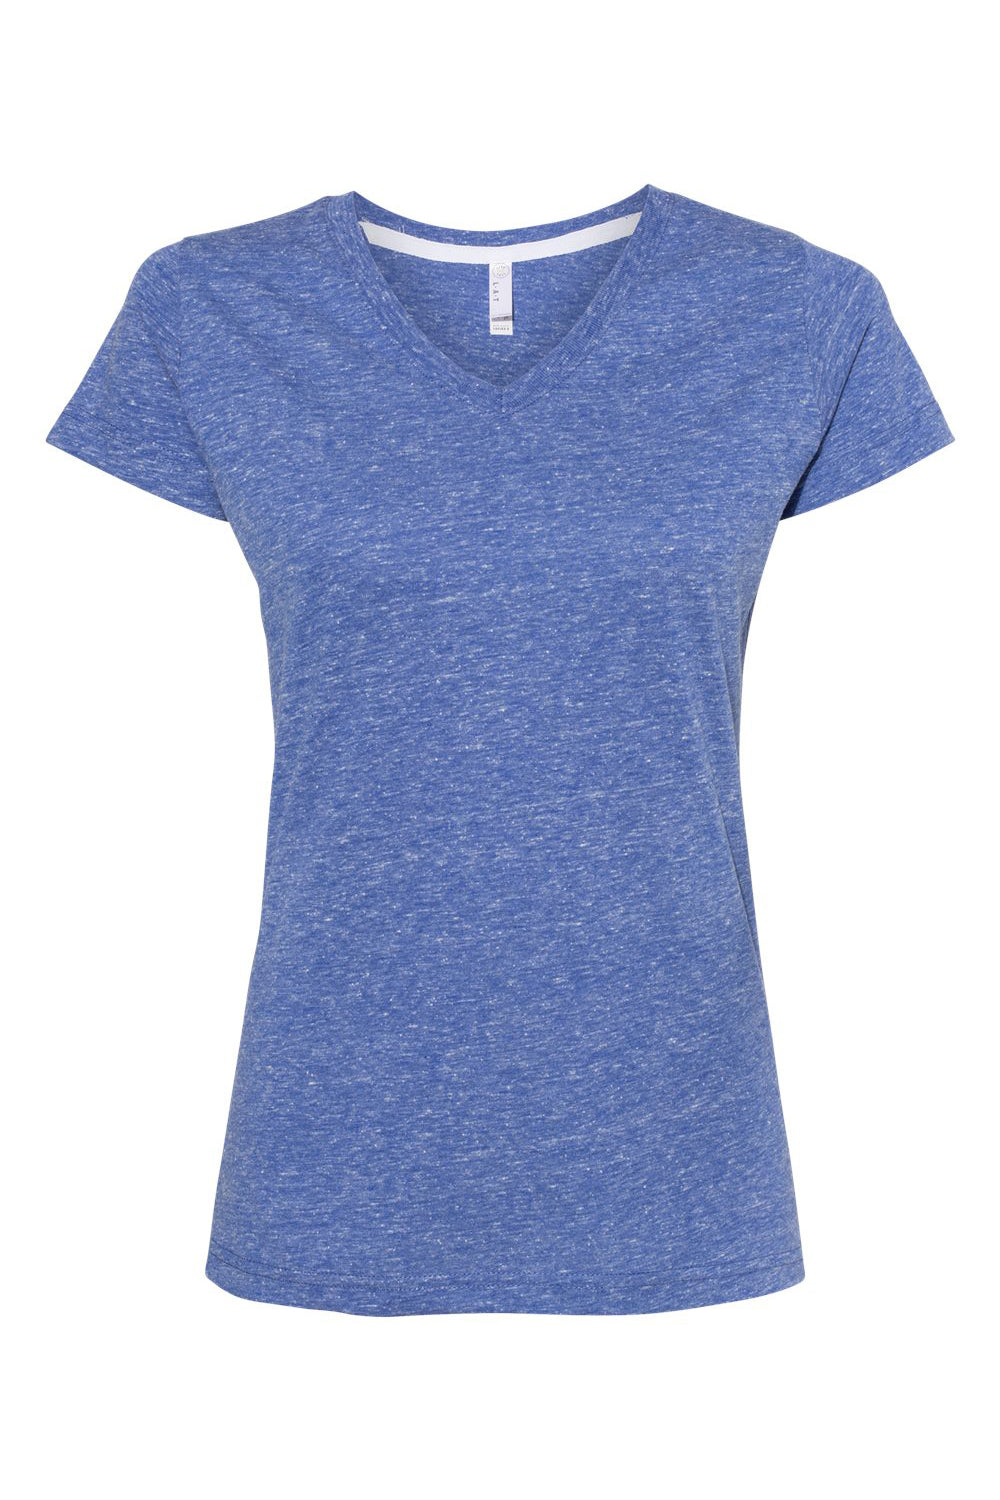 LAT 3591 Womens Harborside Melange Short Sleeve V-Neck T-Shirt Royal Blue Flat Front